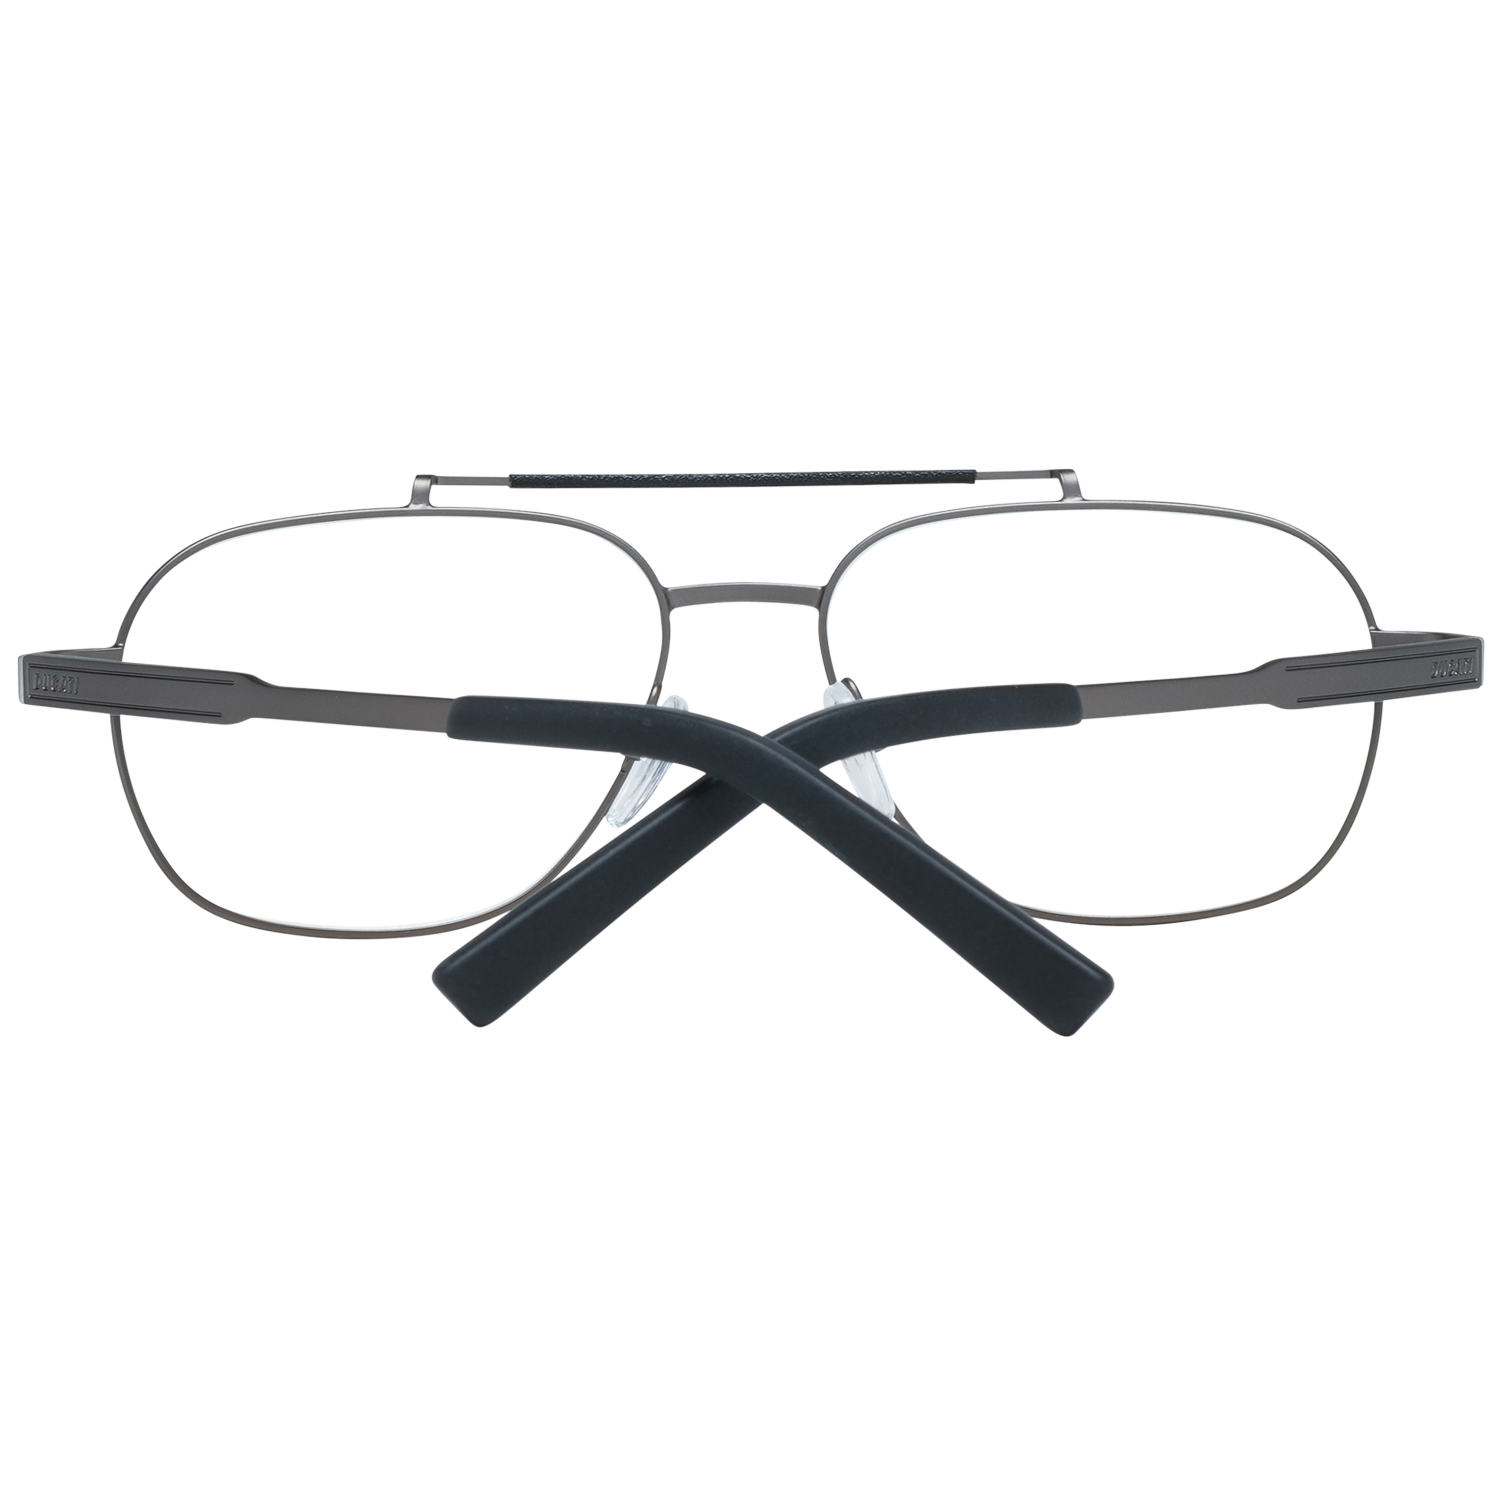 Ducati Frames Ducati Optical Frame DA3018 900 56 Eyeglasses Eyewear UK USA Australia 